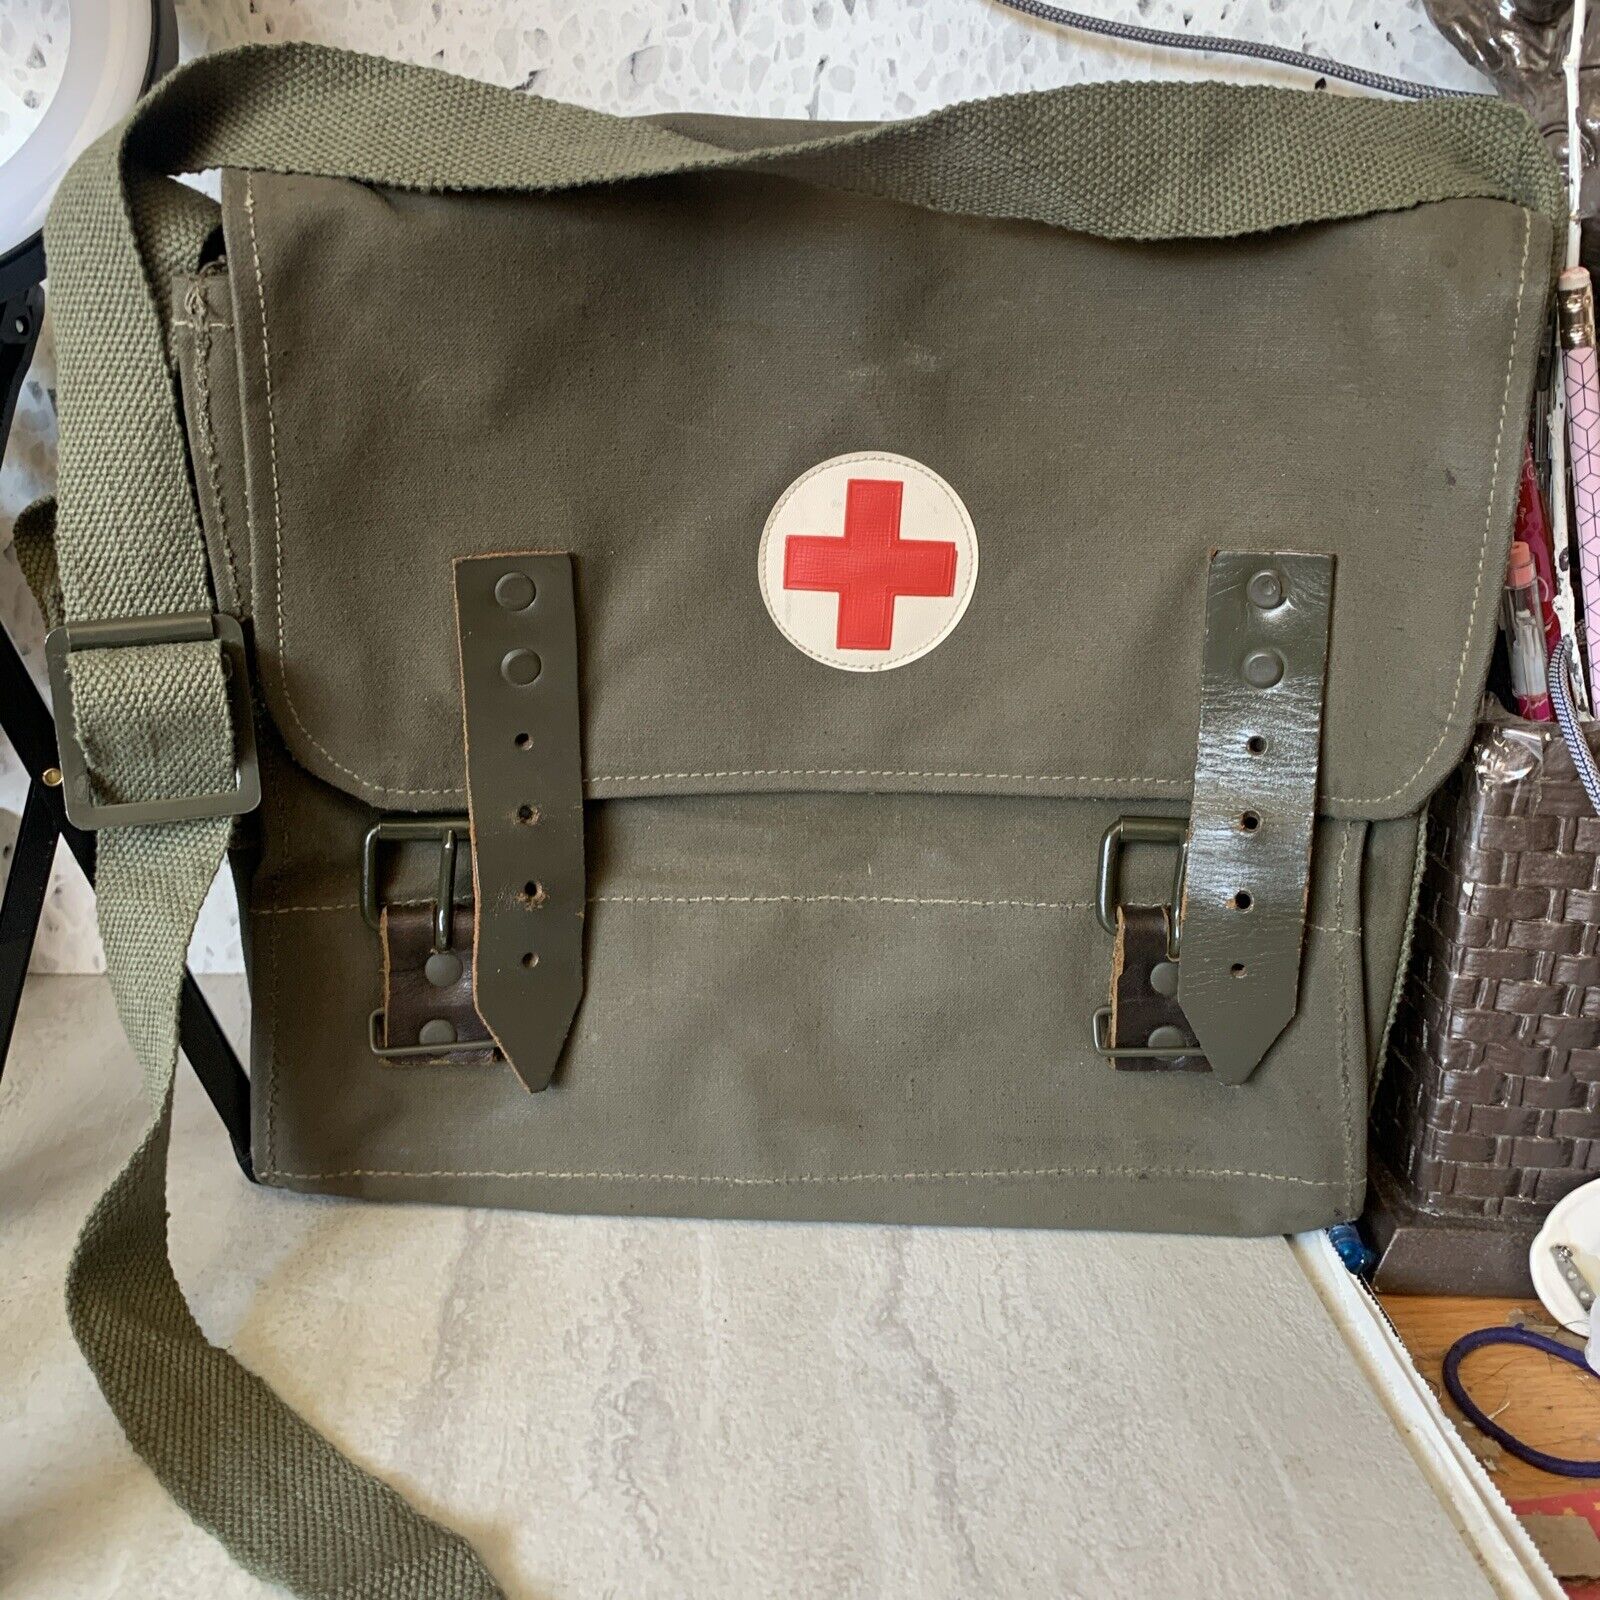 Original Bundeswehr (German Armed Forces) Medic/Emerg. bag